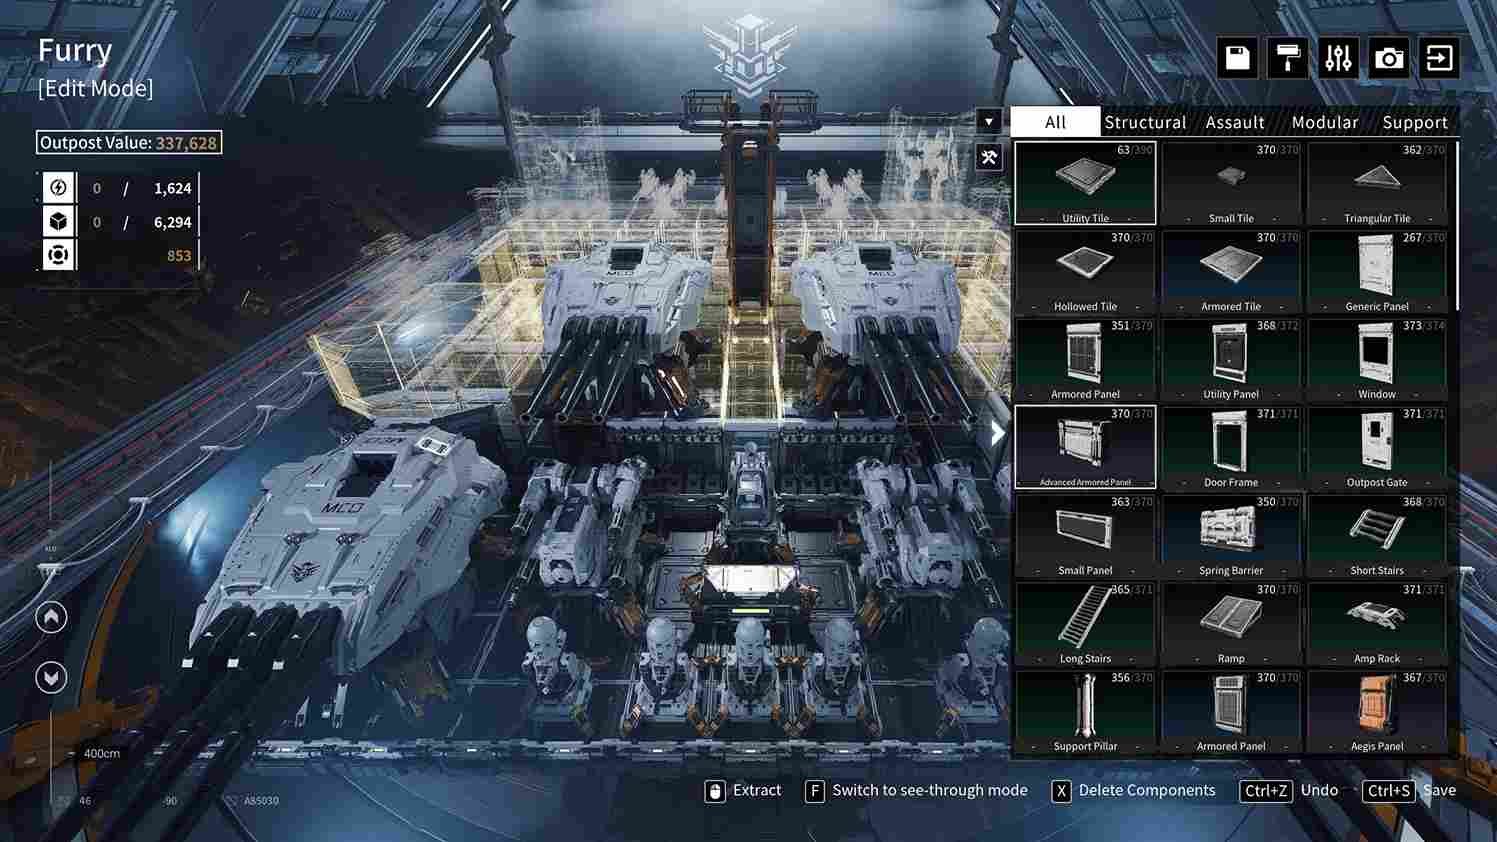 Outpost Infinity Siege Steam Deck, Asus Rog Ally & Lenovo Legion Go Support Details